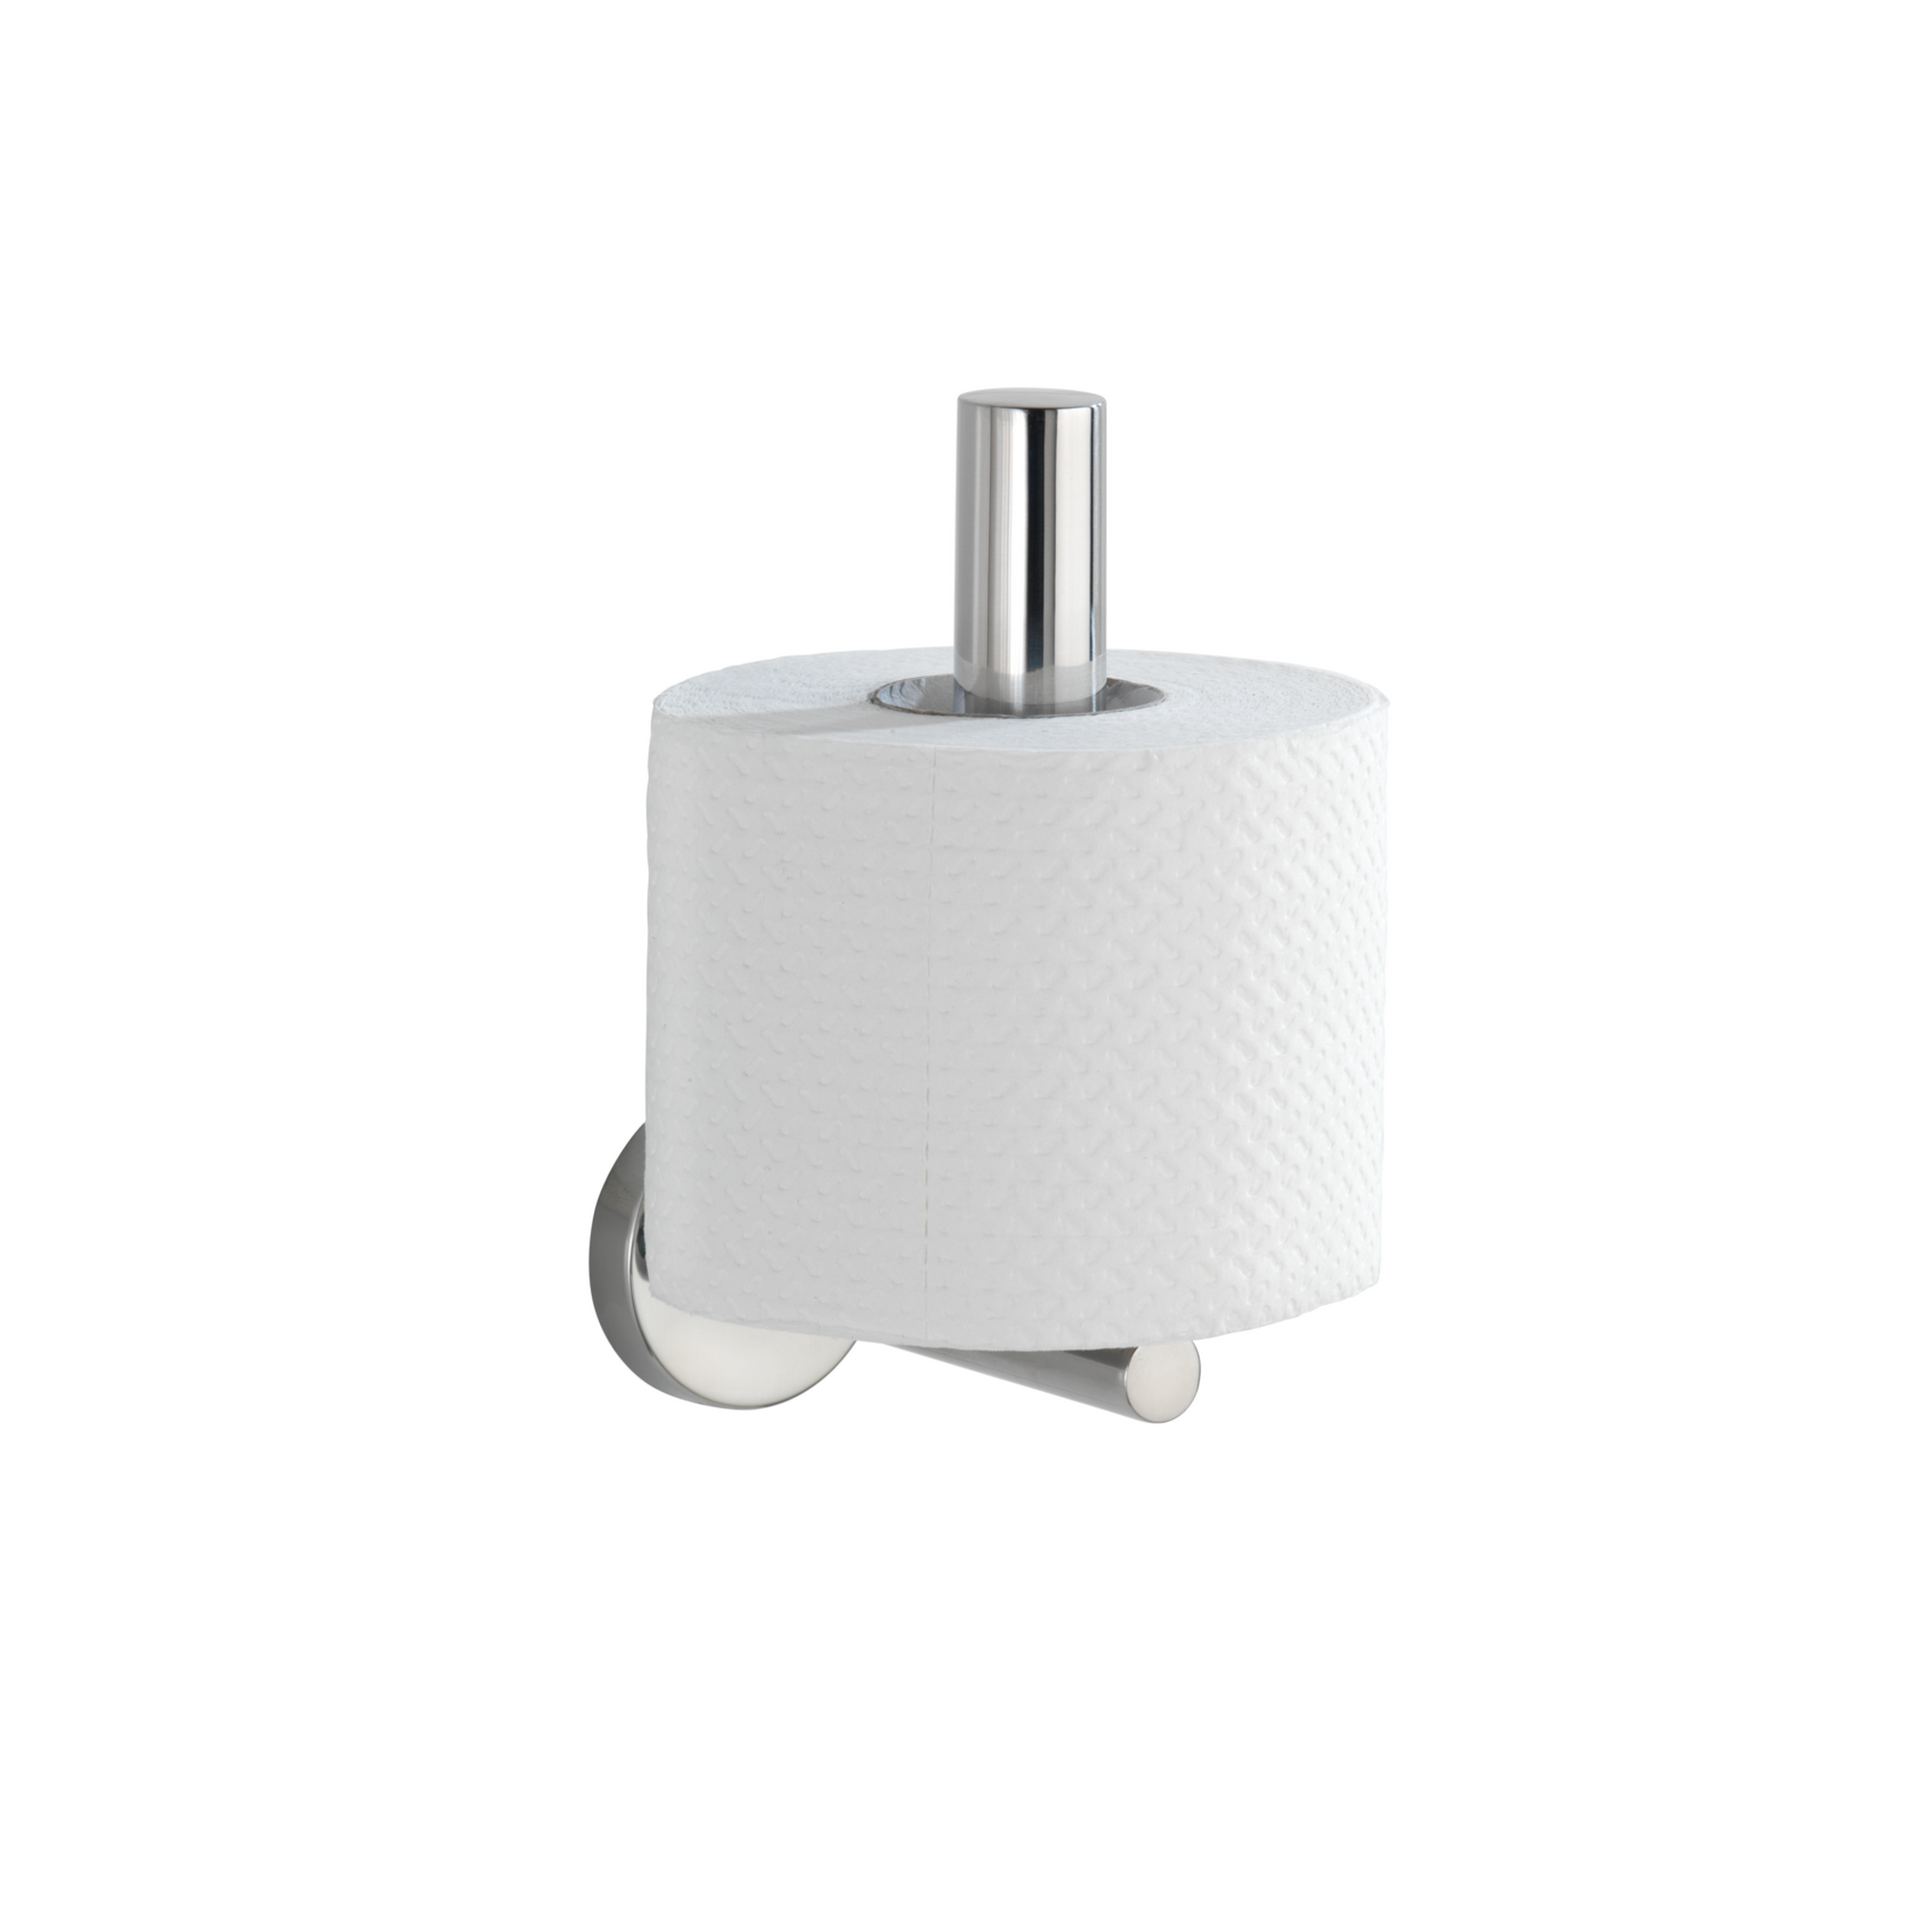 Toilettenpapier-Ersatzrollenhalter 'Bosio Shine' Edelstahl rostfrei + product picture